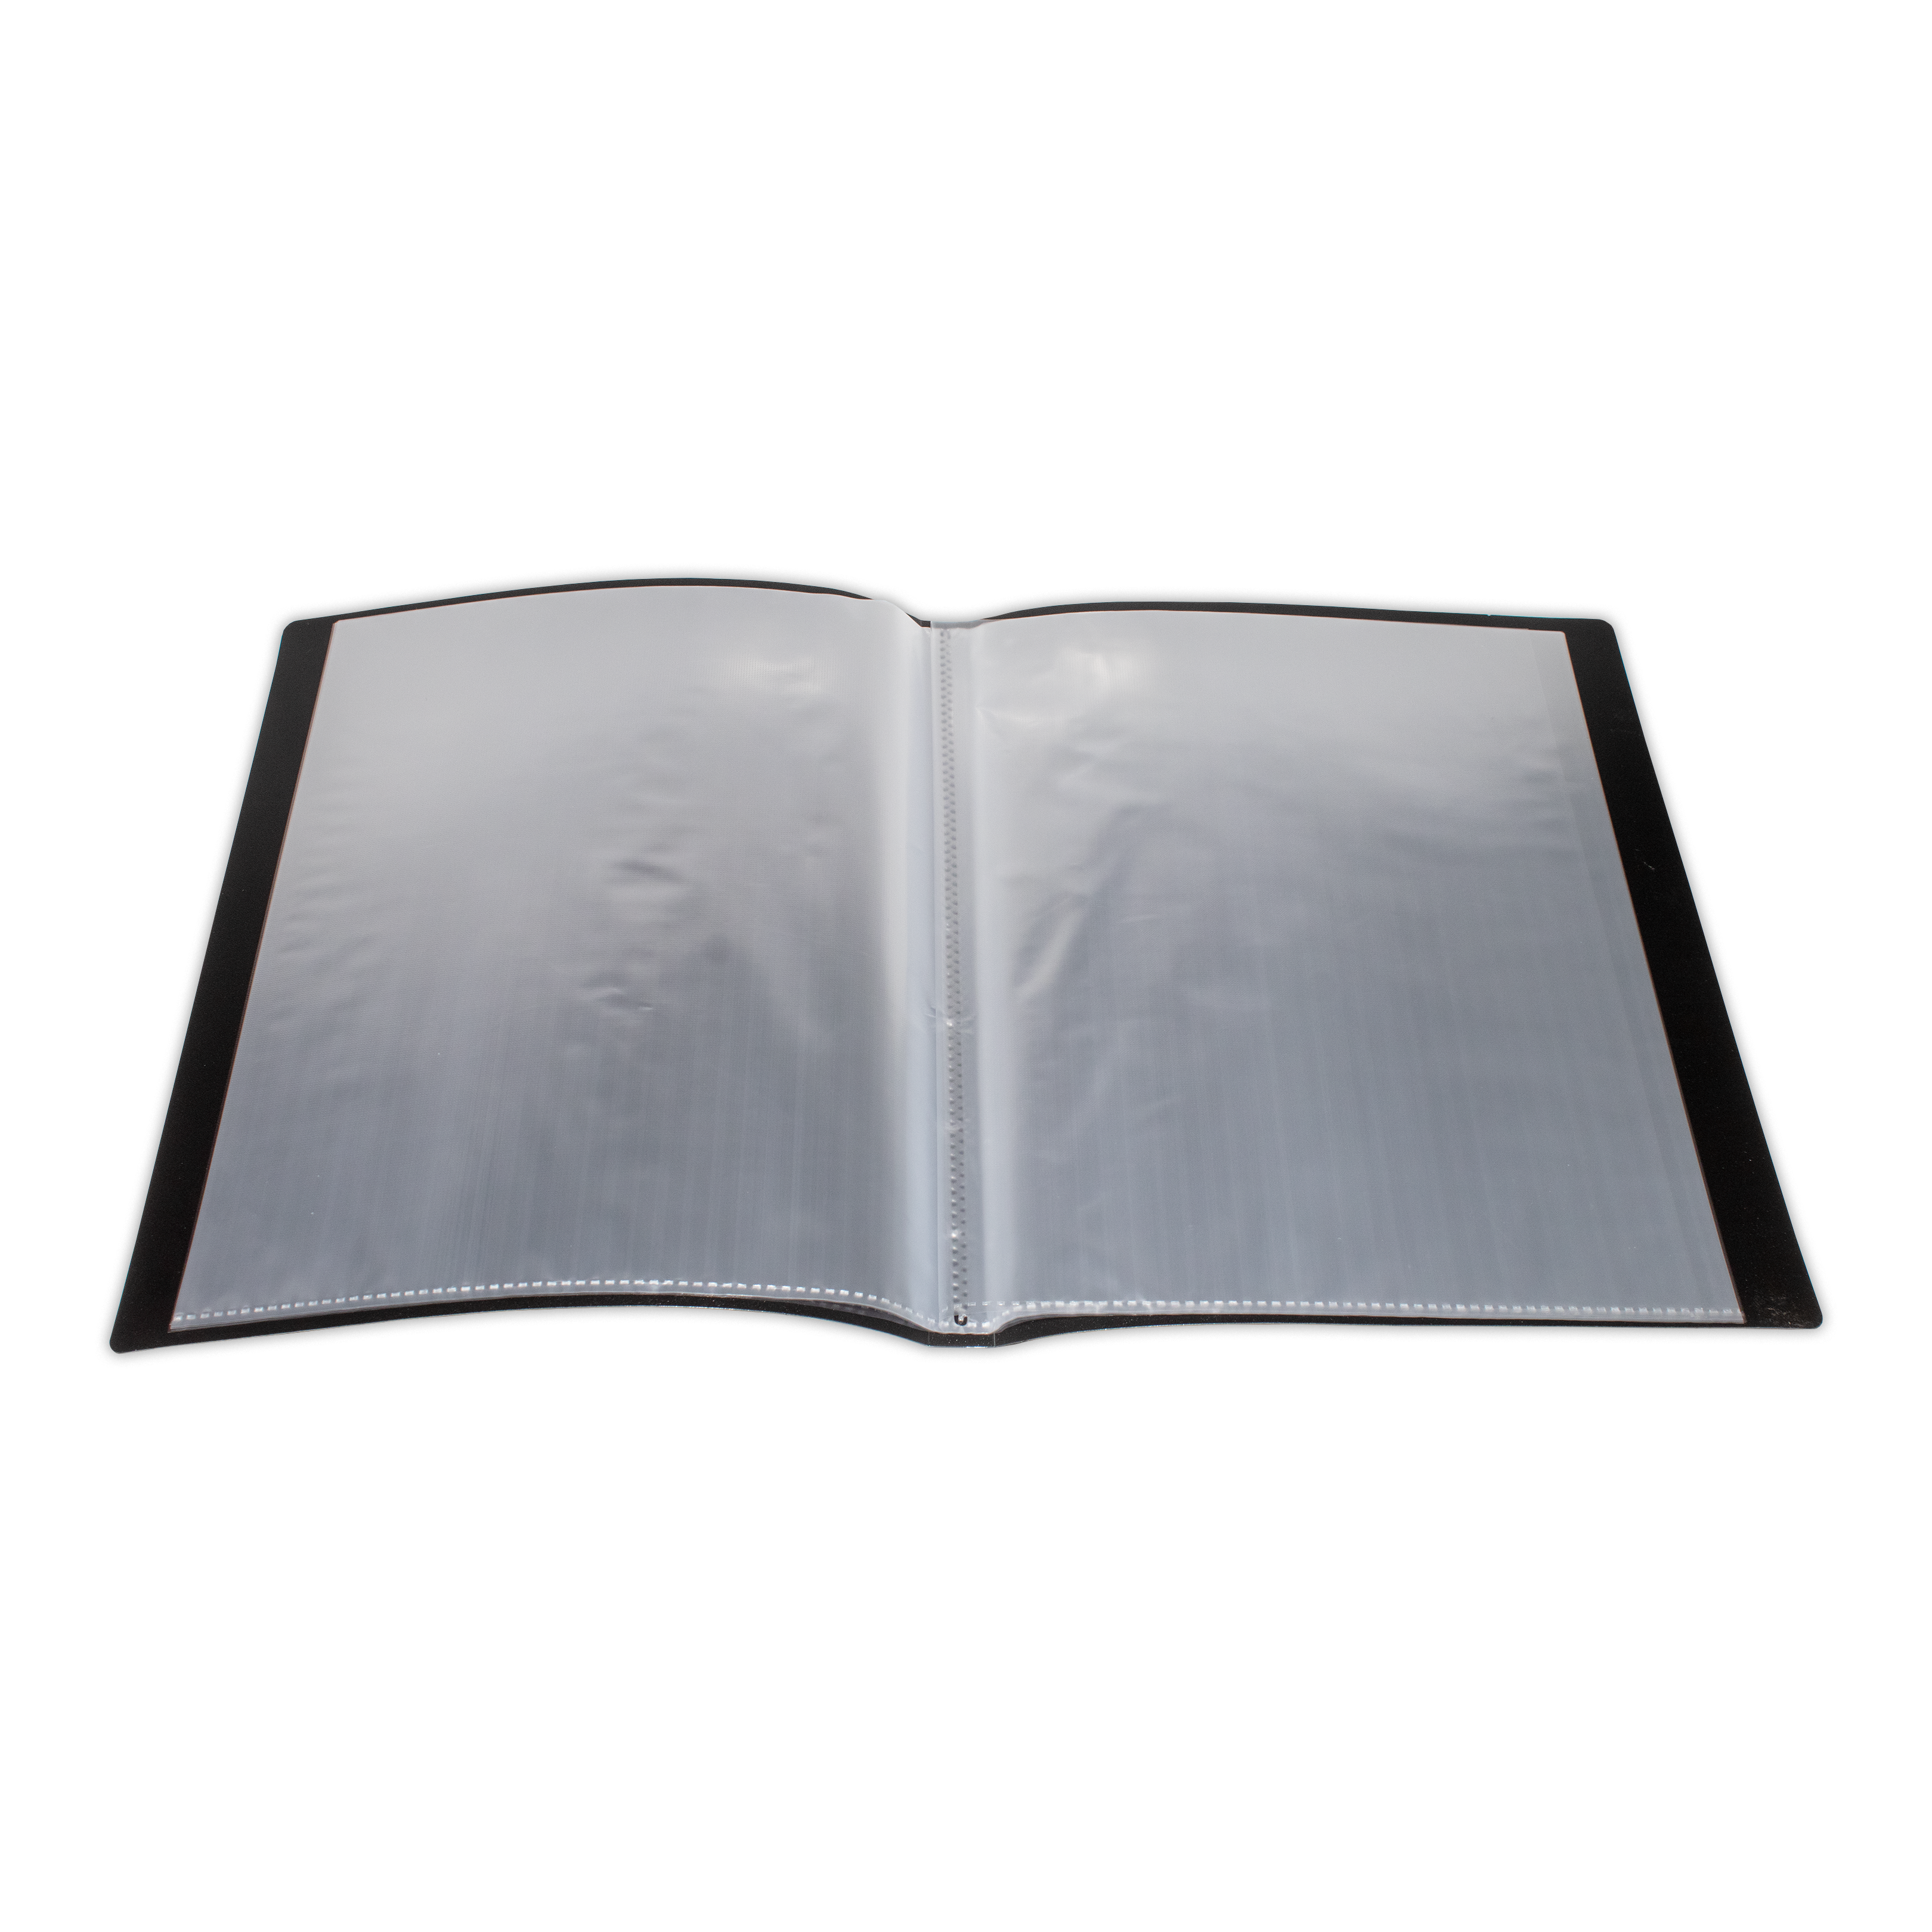 Display Book Folder 1pc- A4 size